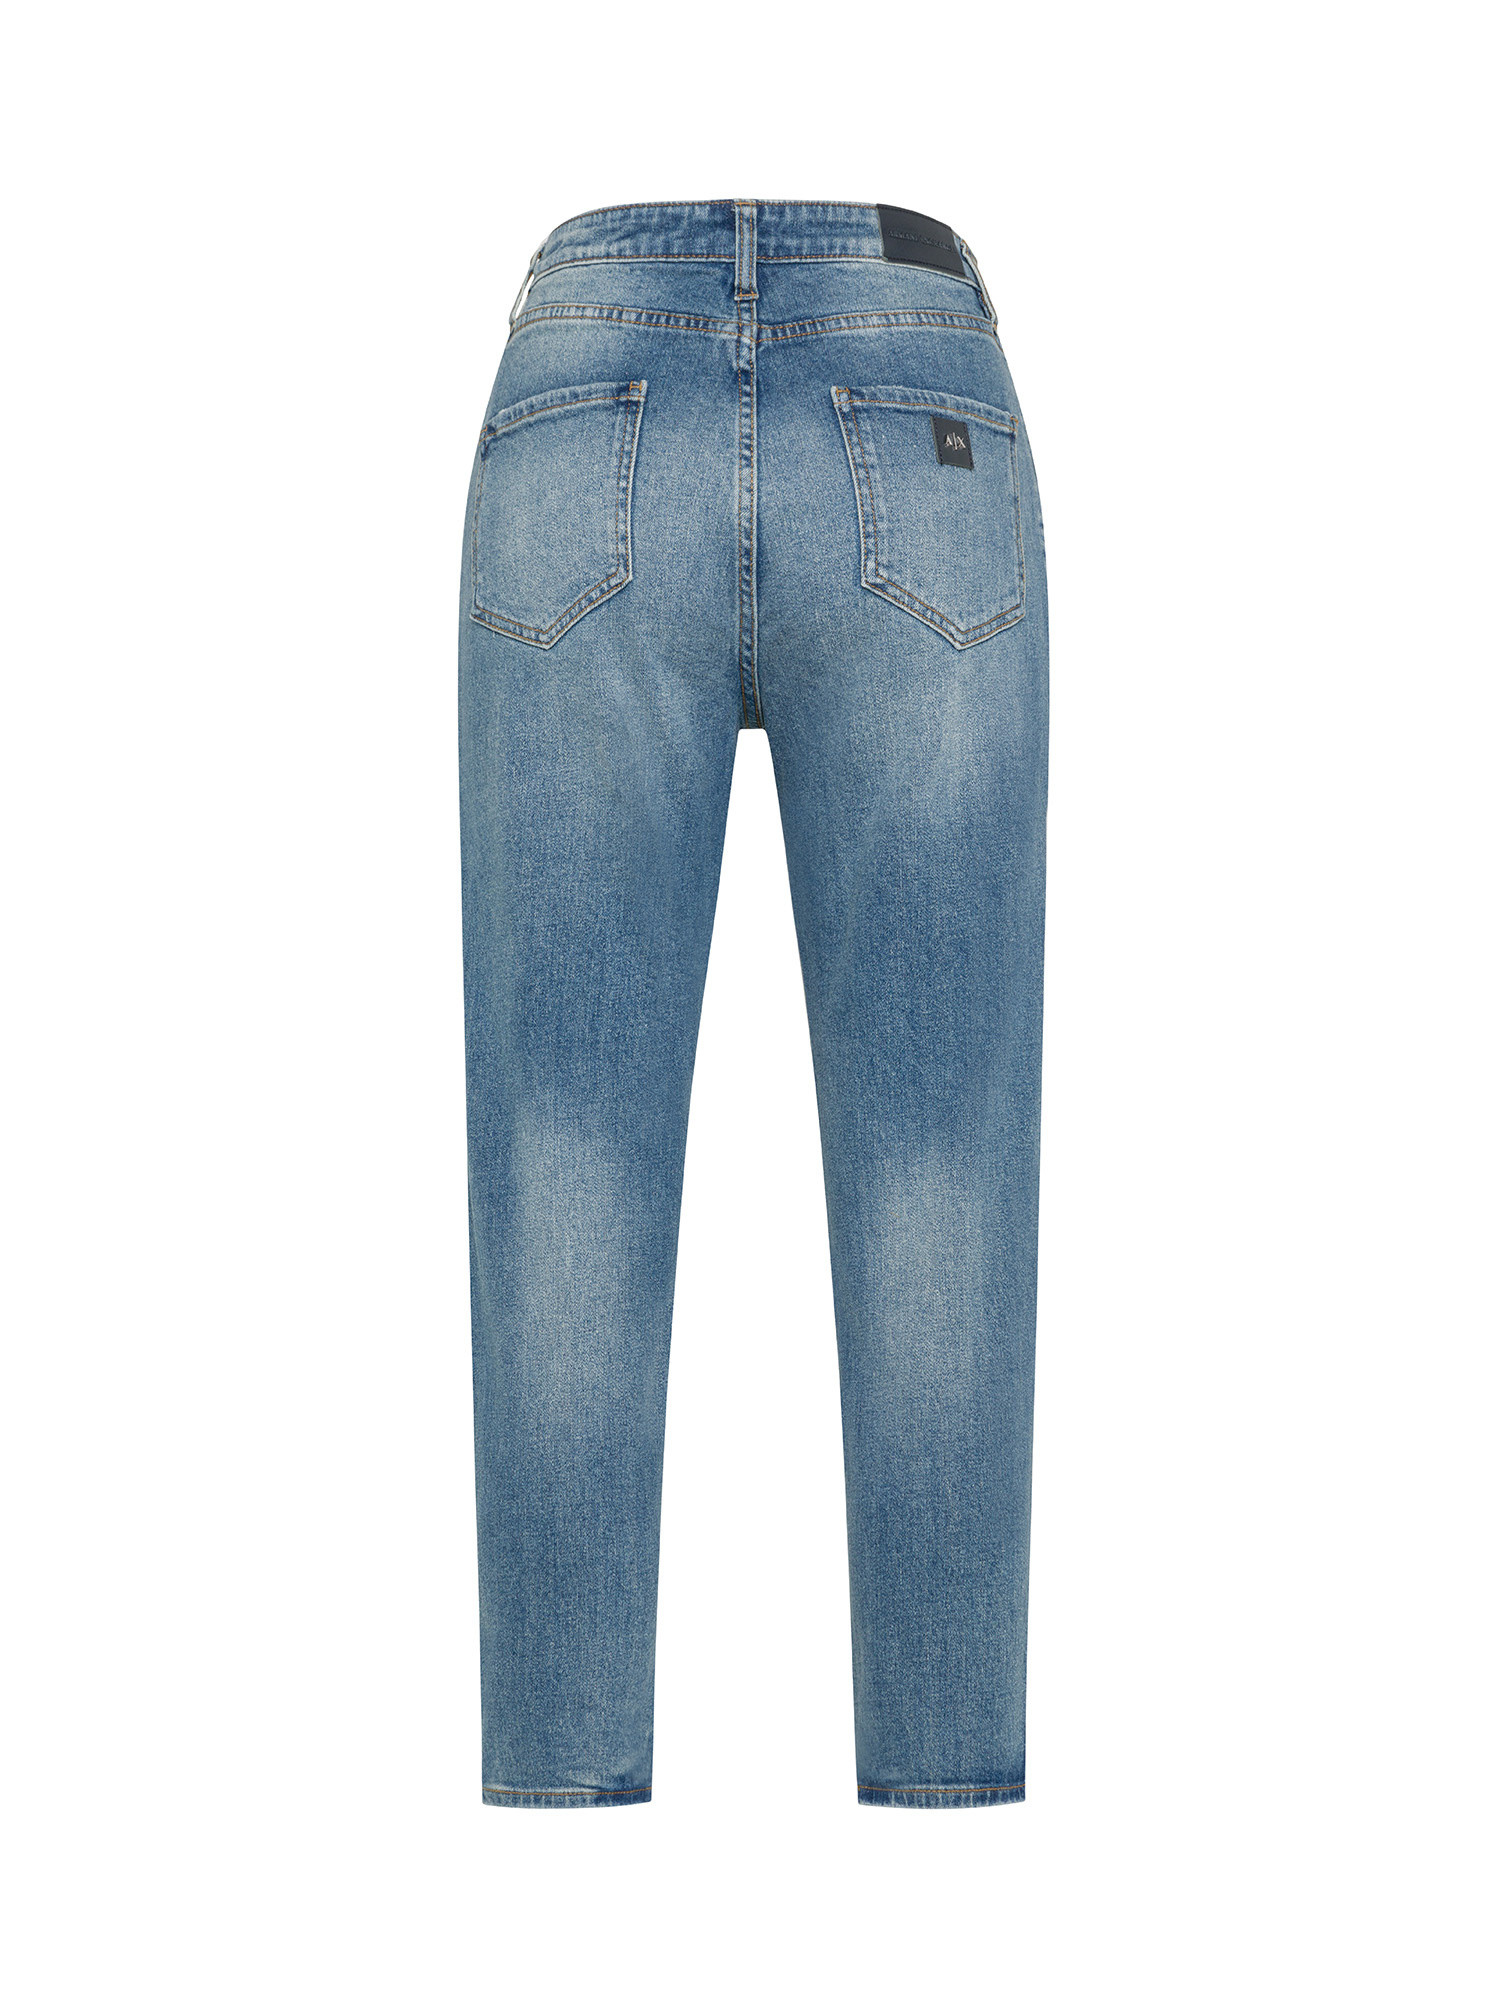 Armani Exchange - Jeans cinque tasche con logo, Denim, large image number 1